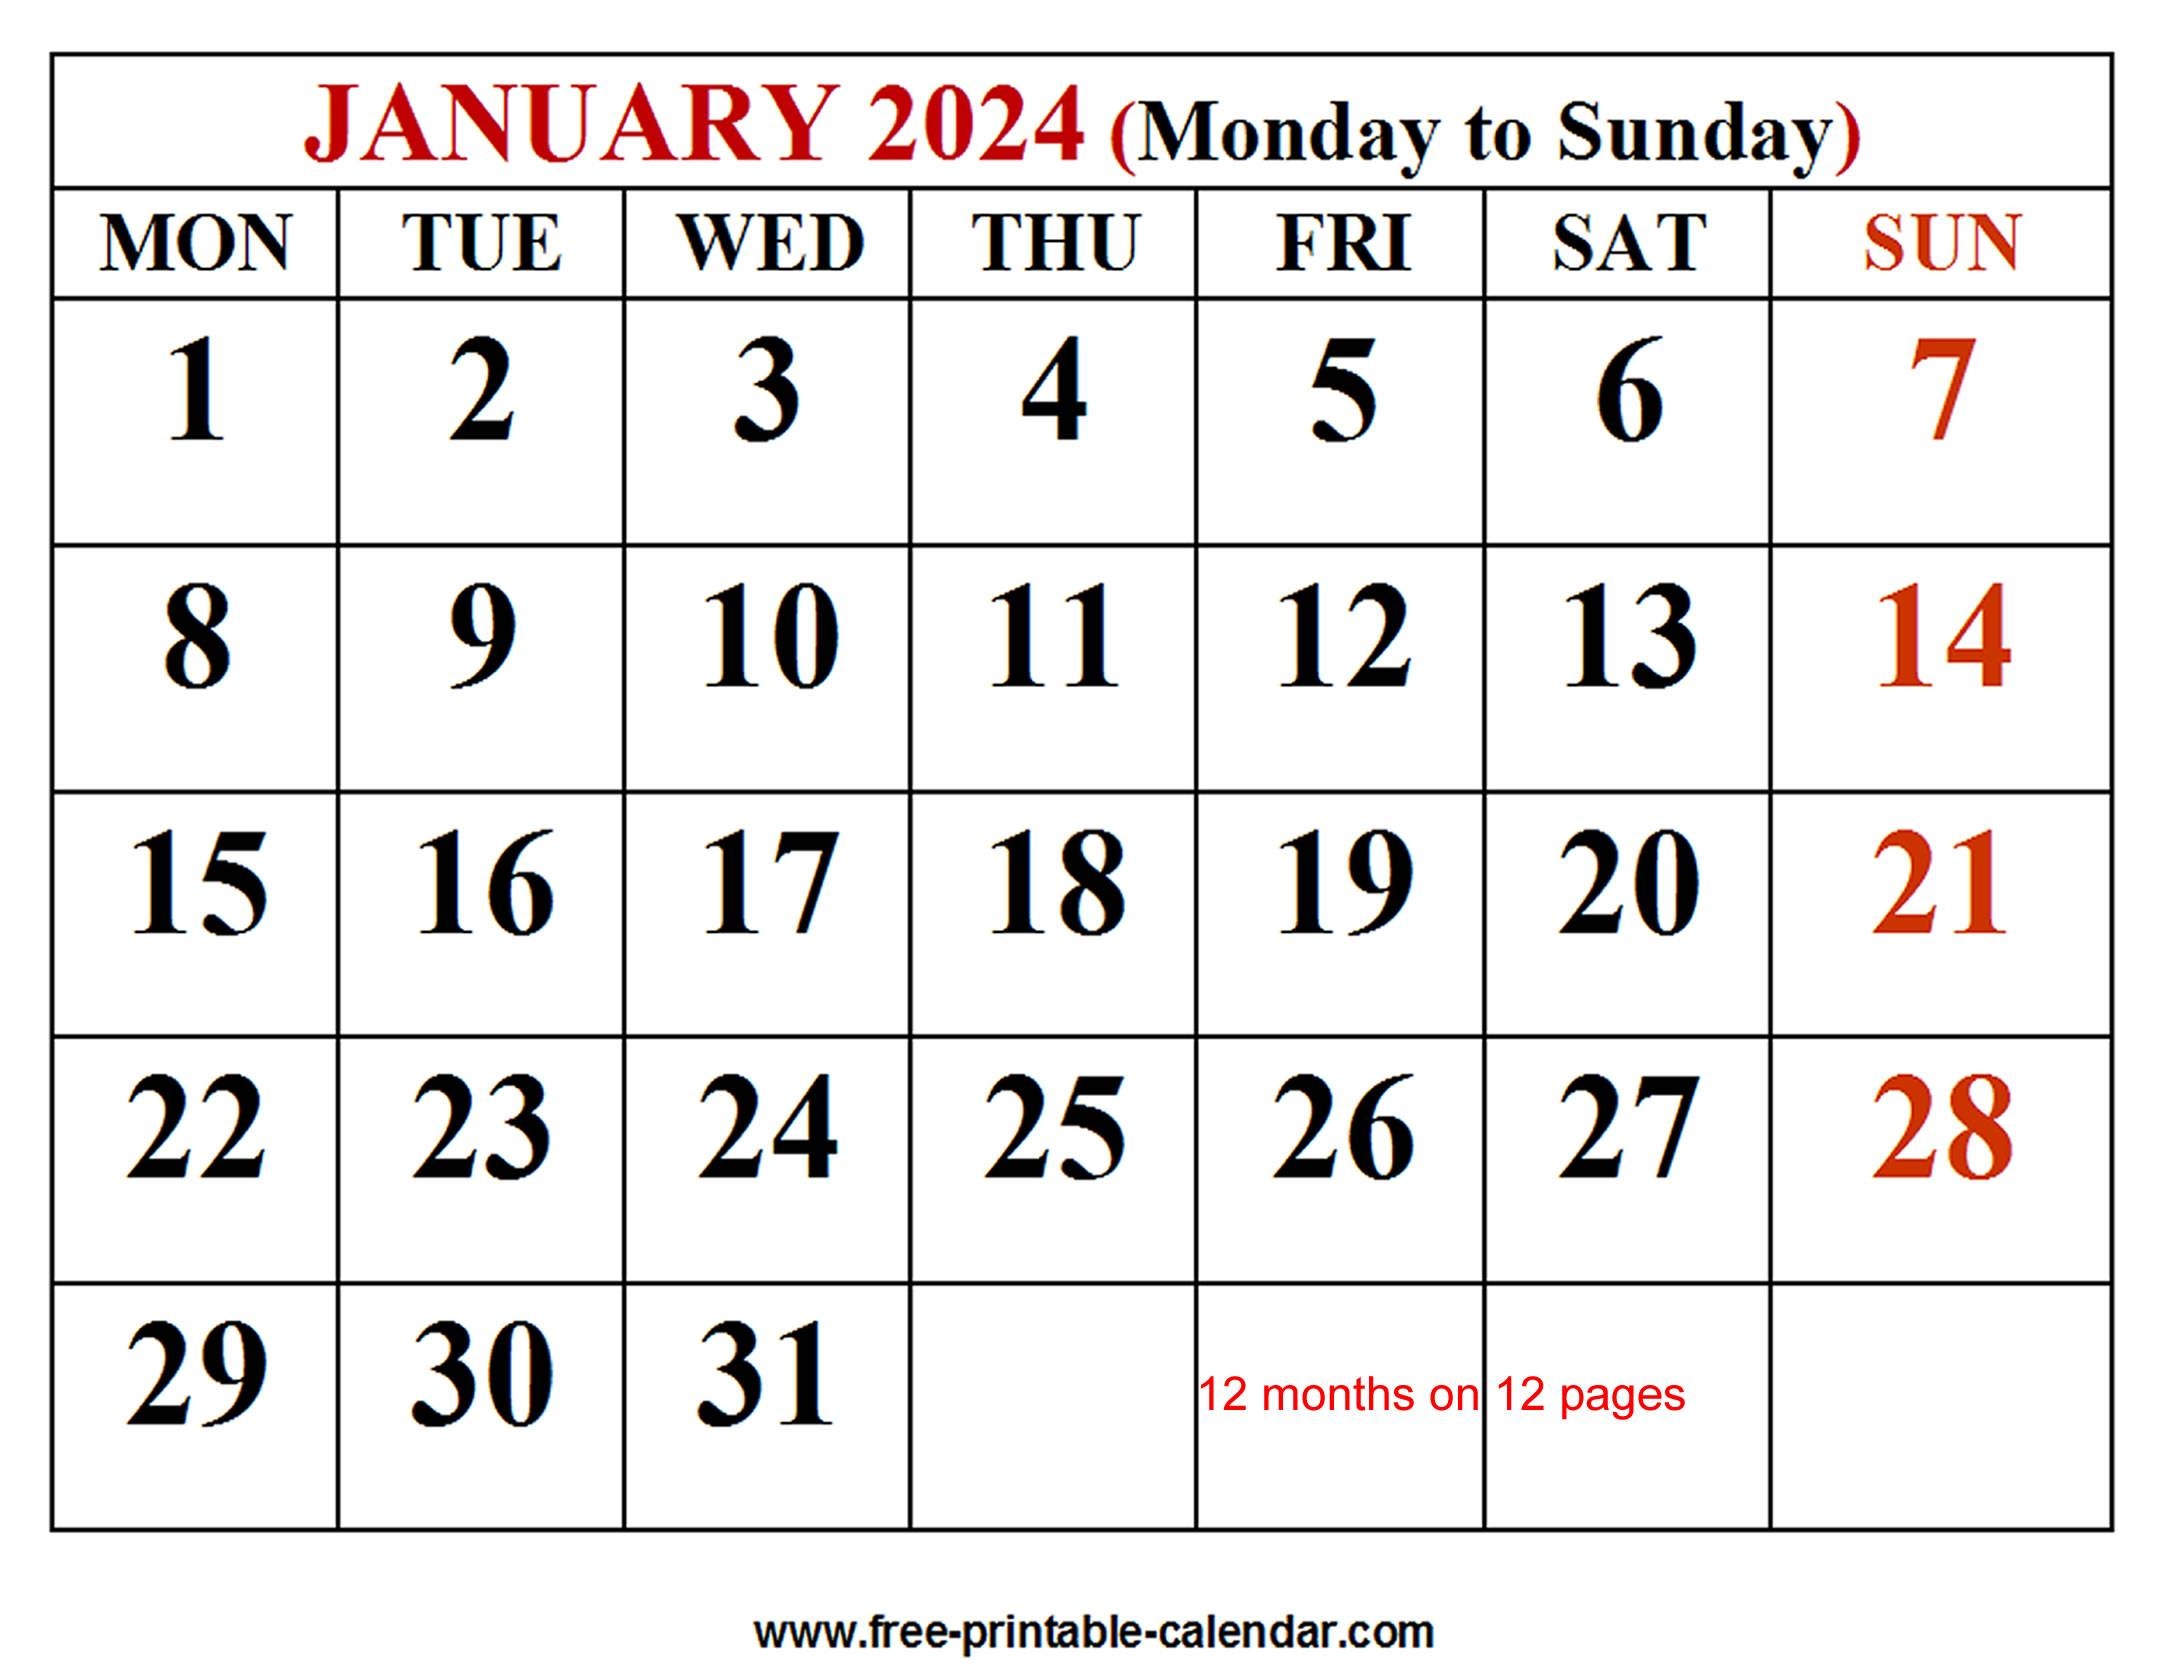 2024 Calendar Template - Free-Printable-Calendar throughout Free Printable Calendar 2024 Grid